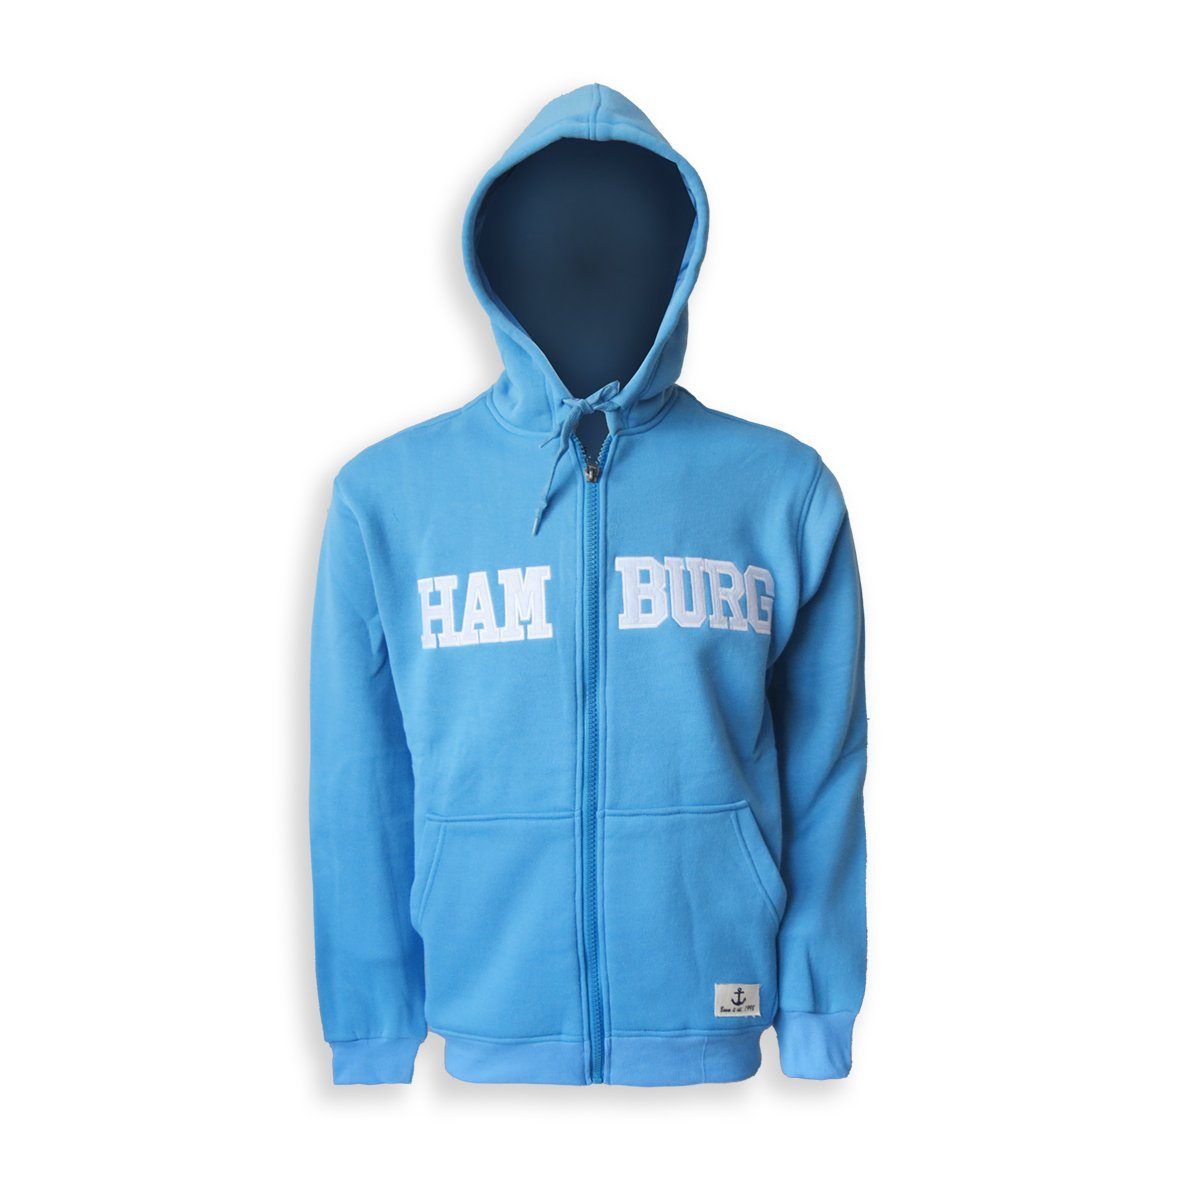 Sonia Originelli T-Shirt Sweatjacke "Hamburg" Herren unifarben Jacke Hoodie bestickt hellblau